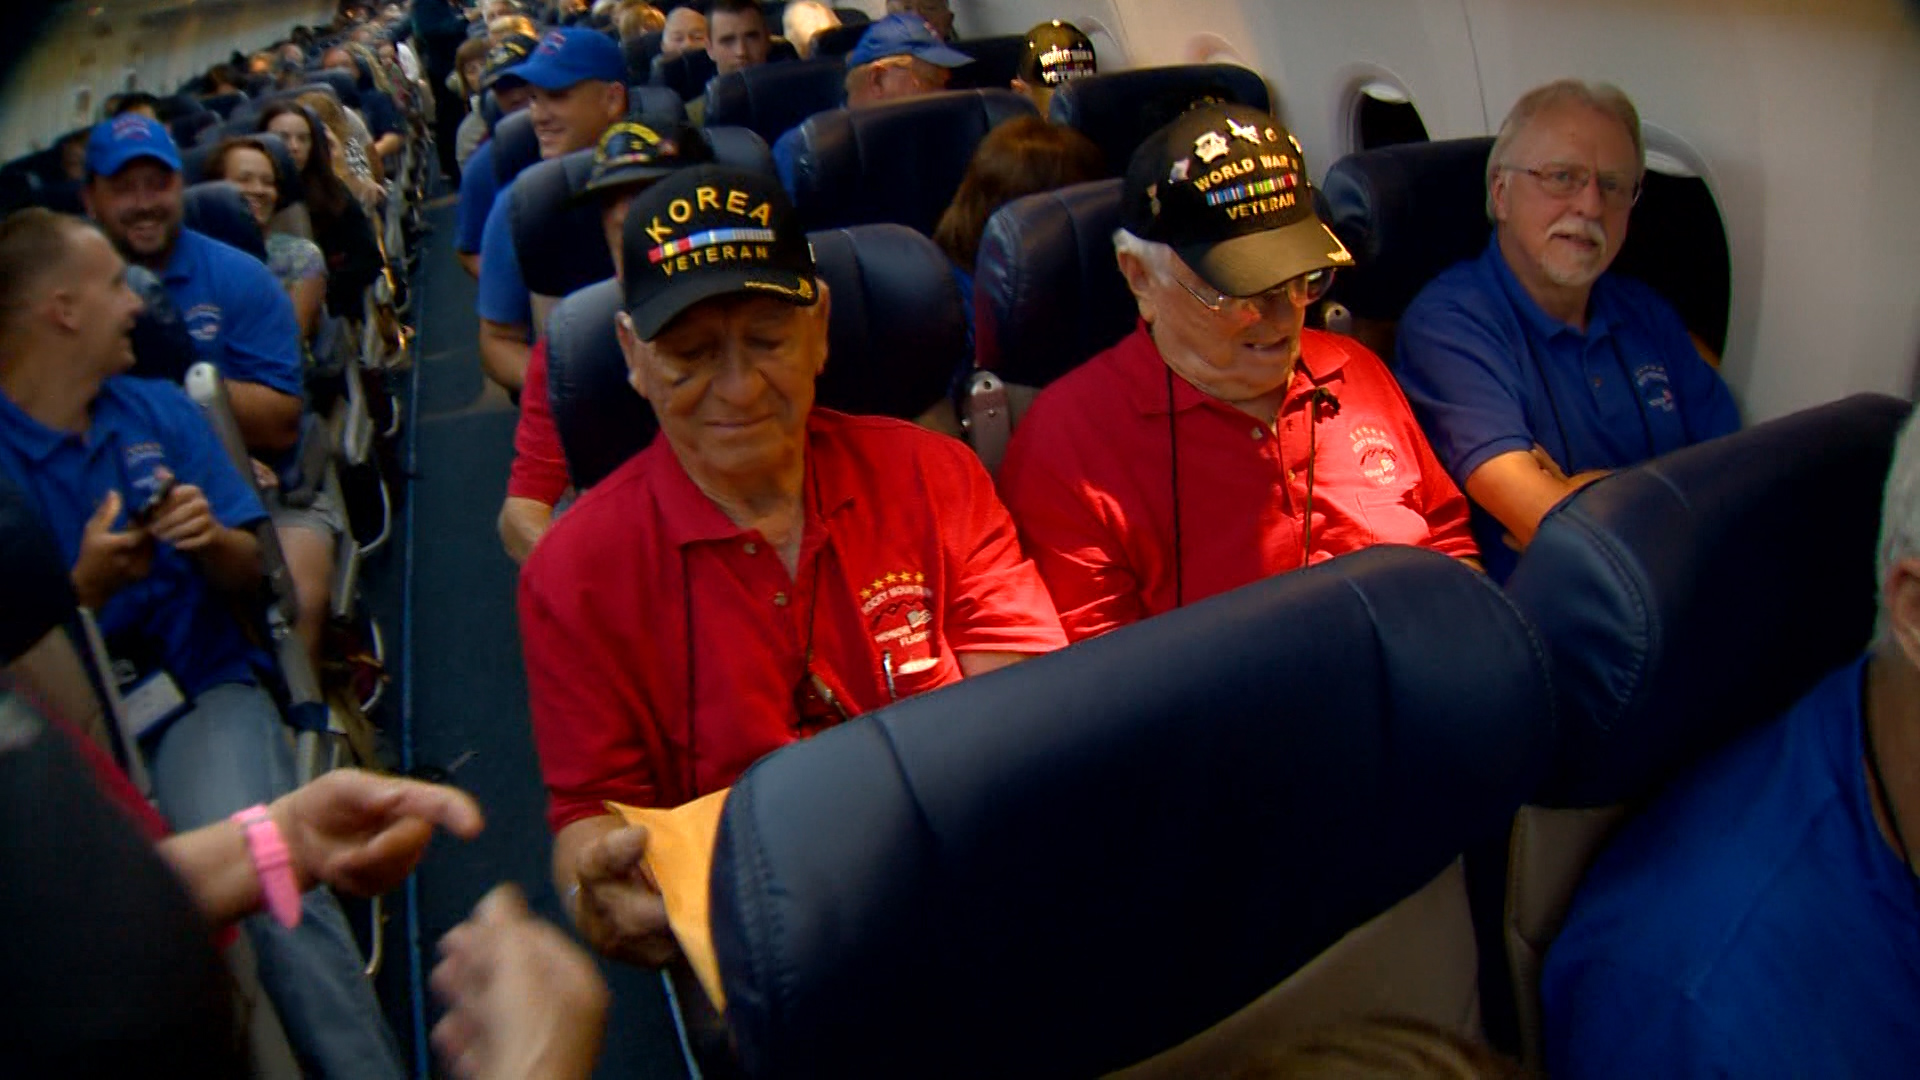 Help send our veterans on an honor flight to Washington D.C.